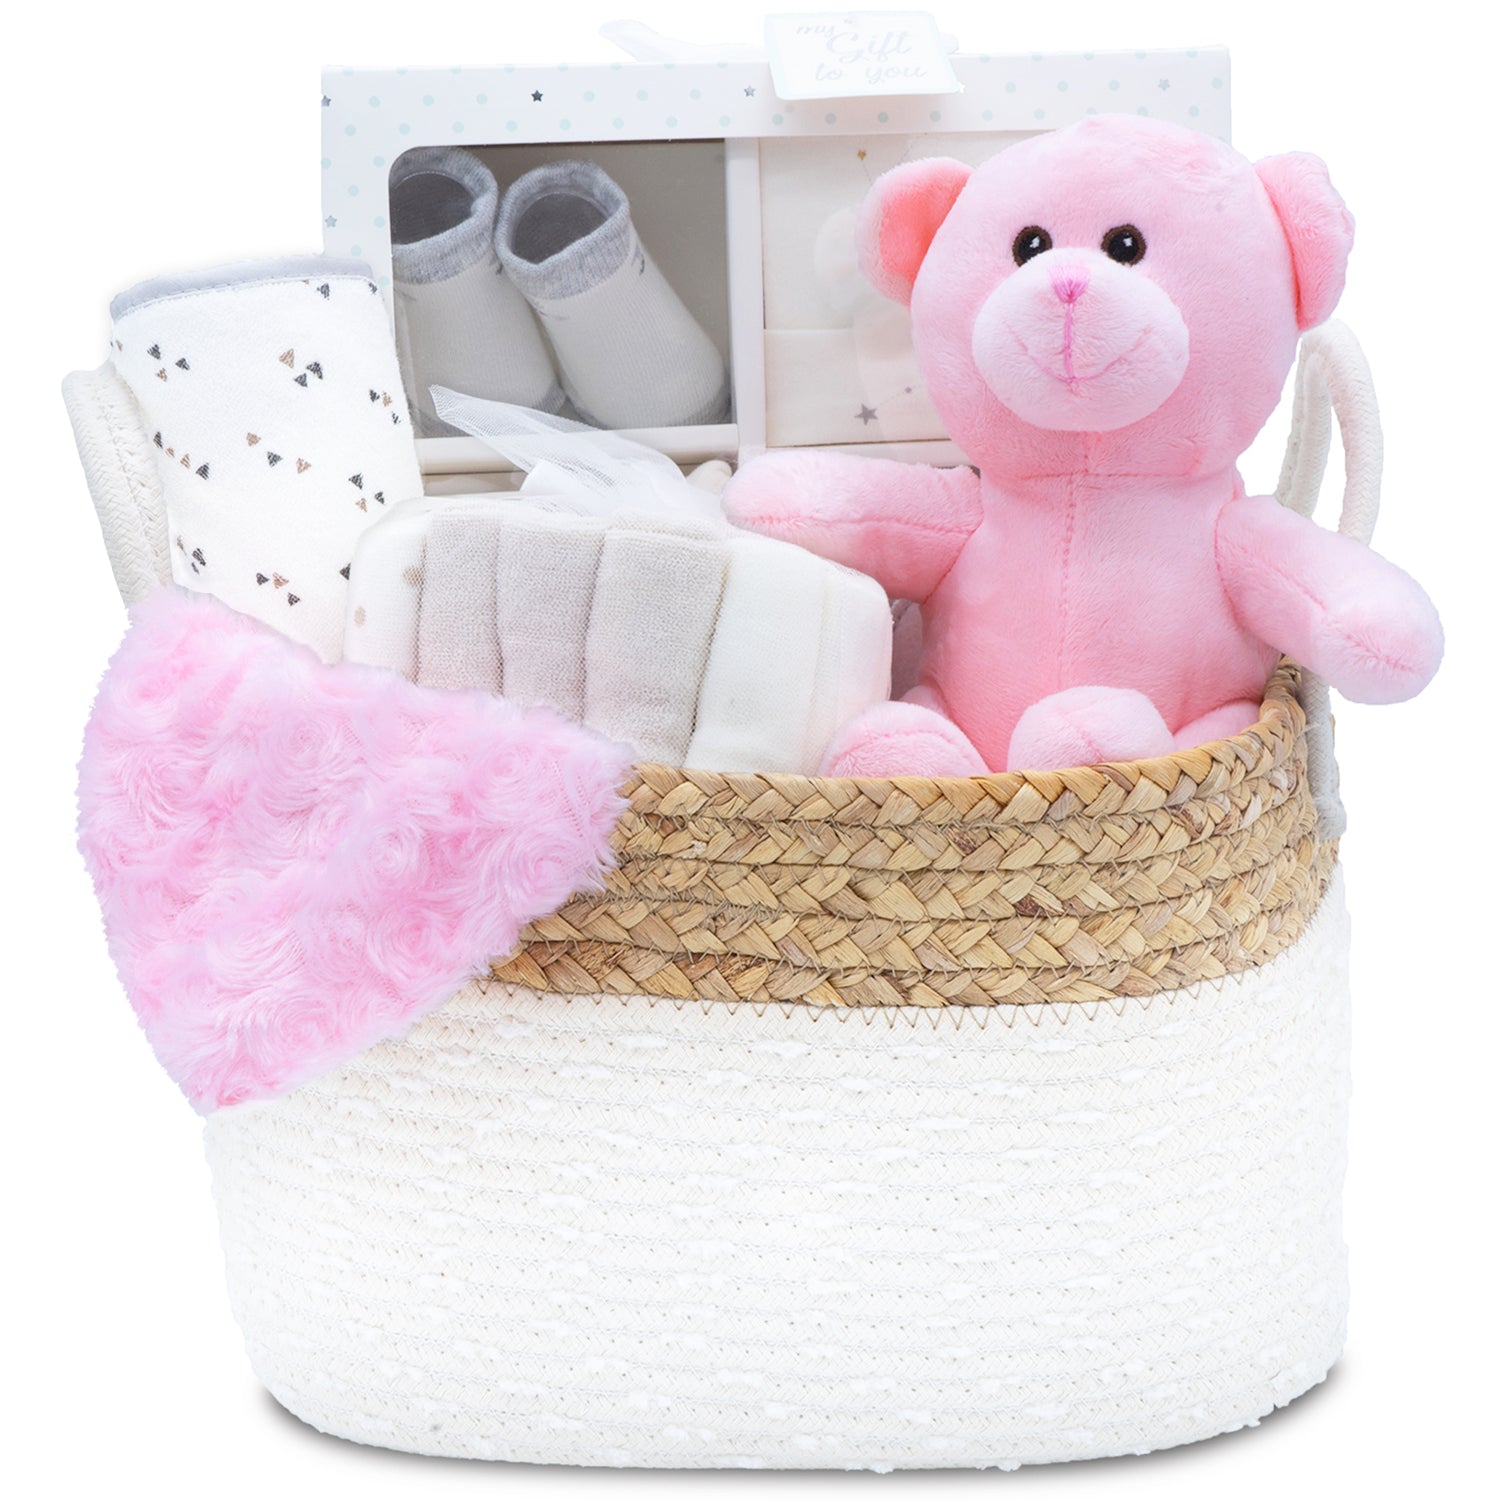 Newborn Girl Comfy Baby Gift Basket